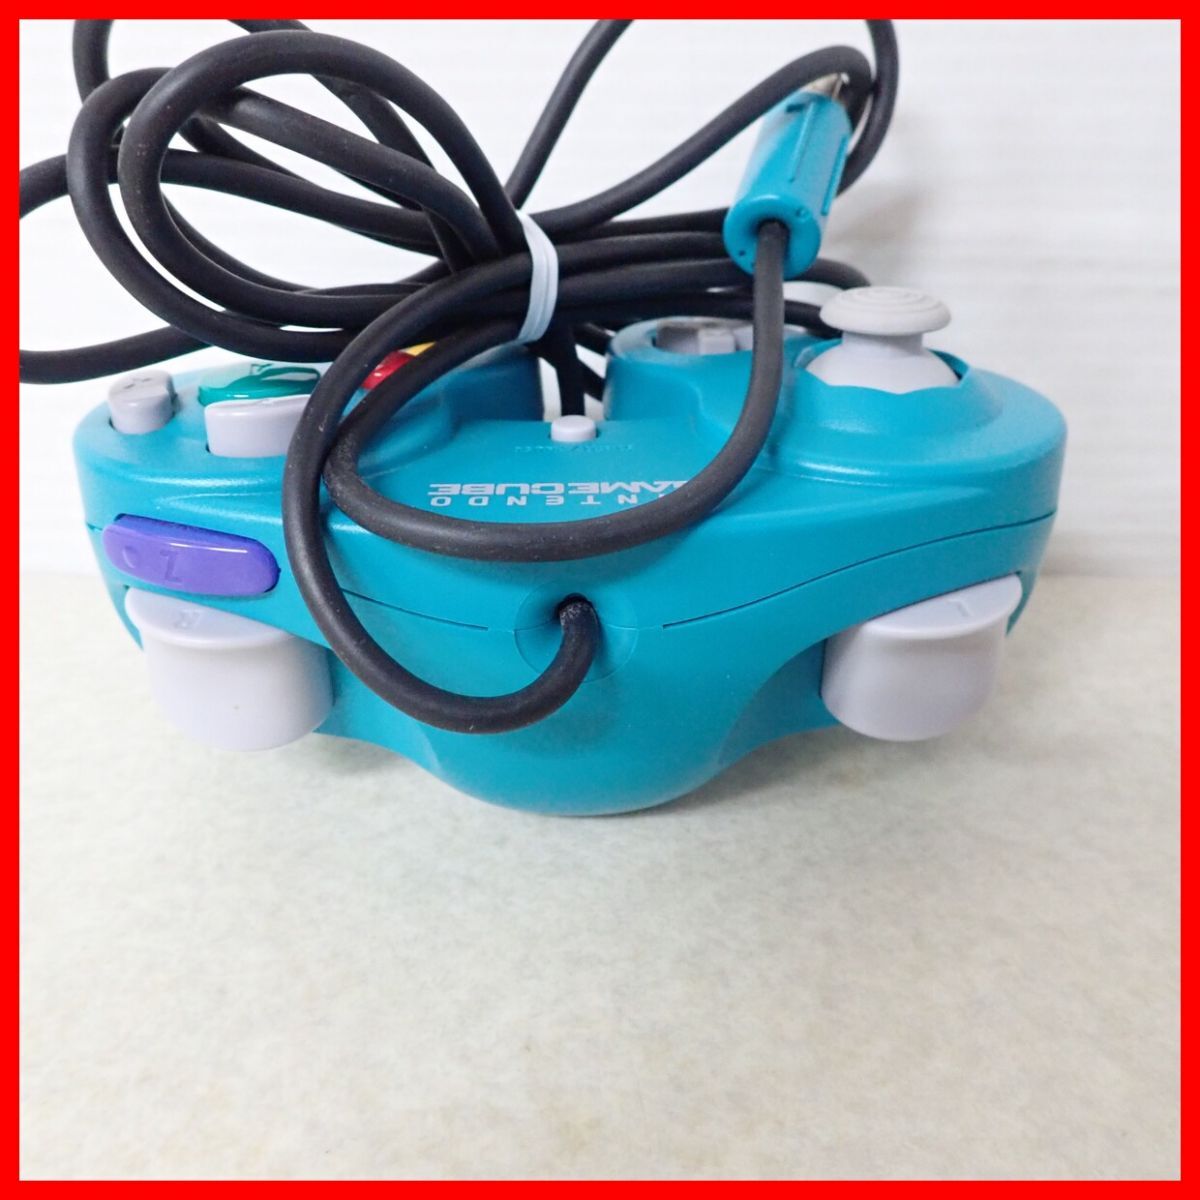 * operation goods GC Game Cube controller emerald blue box attaching DOL-003 nintendo Nintendo[10